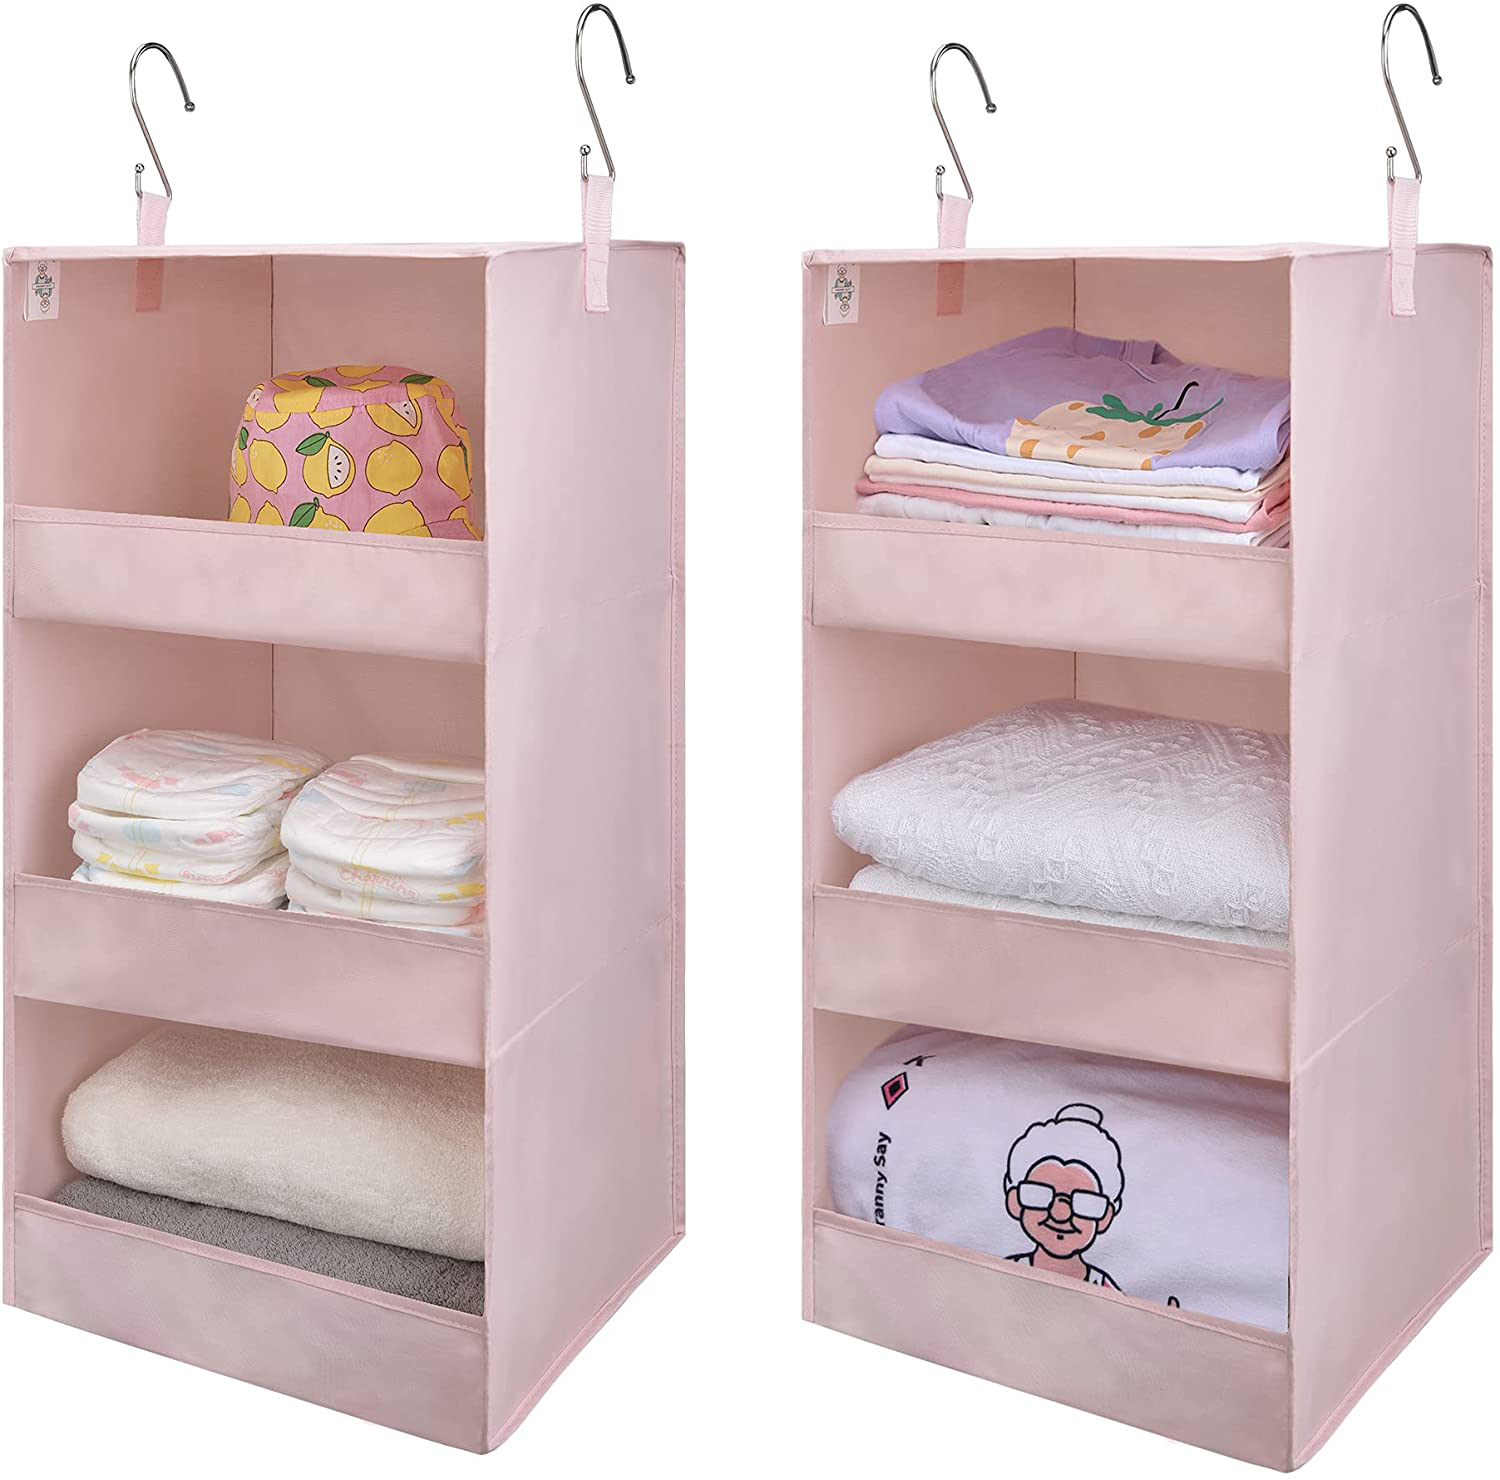 GRANNY SAYS 3-Shelf Hanging Closet Organizers, Foldable Closet Hanging Shelves, Nursery Hanging Organizers, Pink, 28.9" H X 12.2" W X 12.2" D, 2-Pack